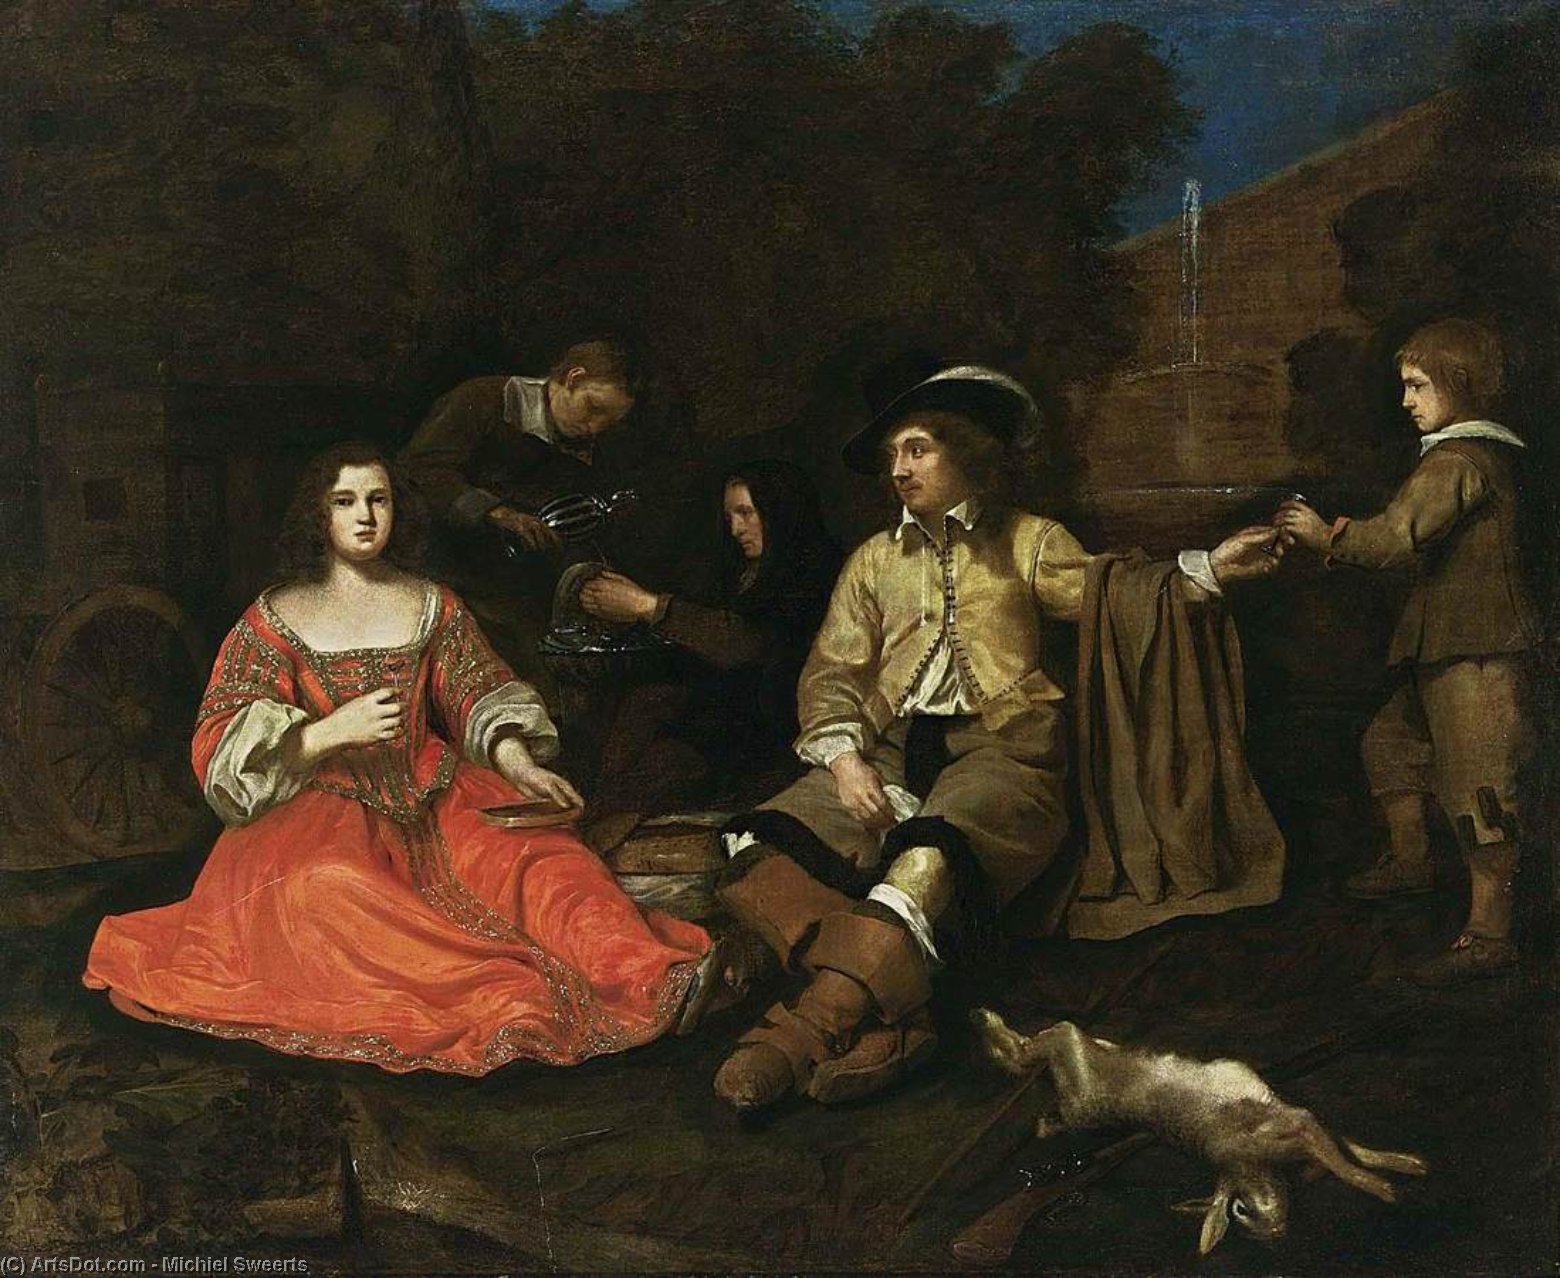 Buy Museum Art Reproductions A Hunting Company Resting, 1651 by Michael Sweerts | ArtsDot.com